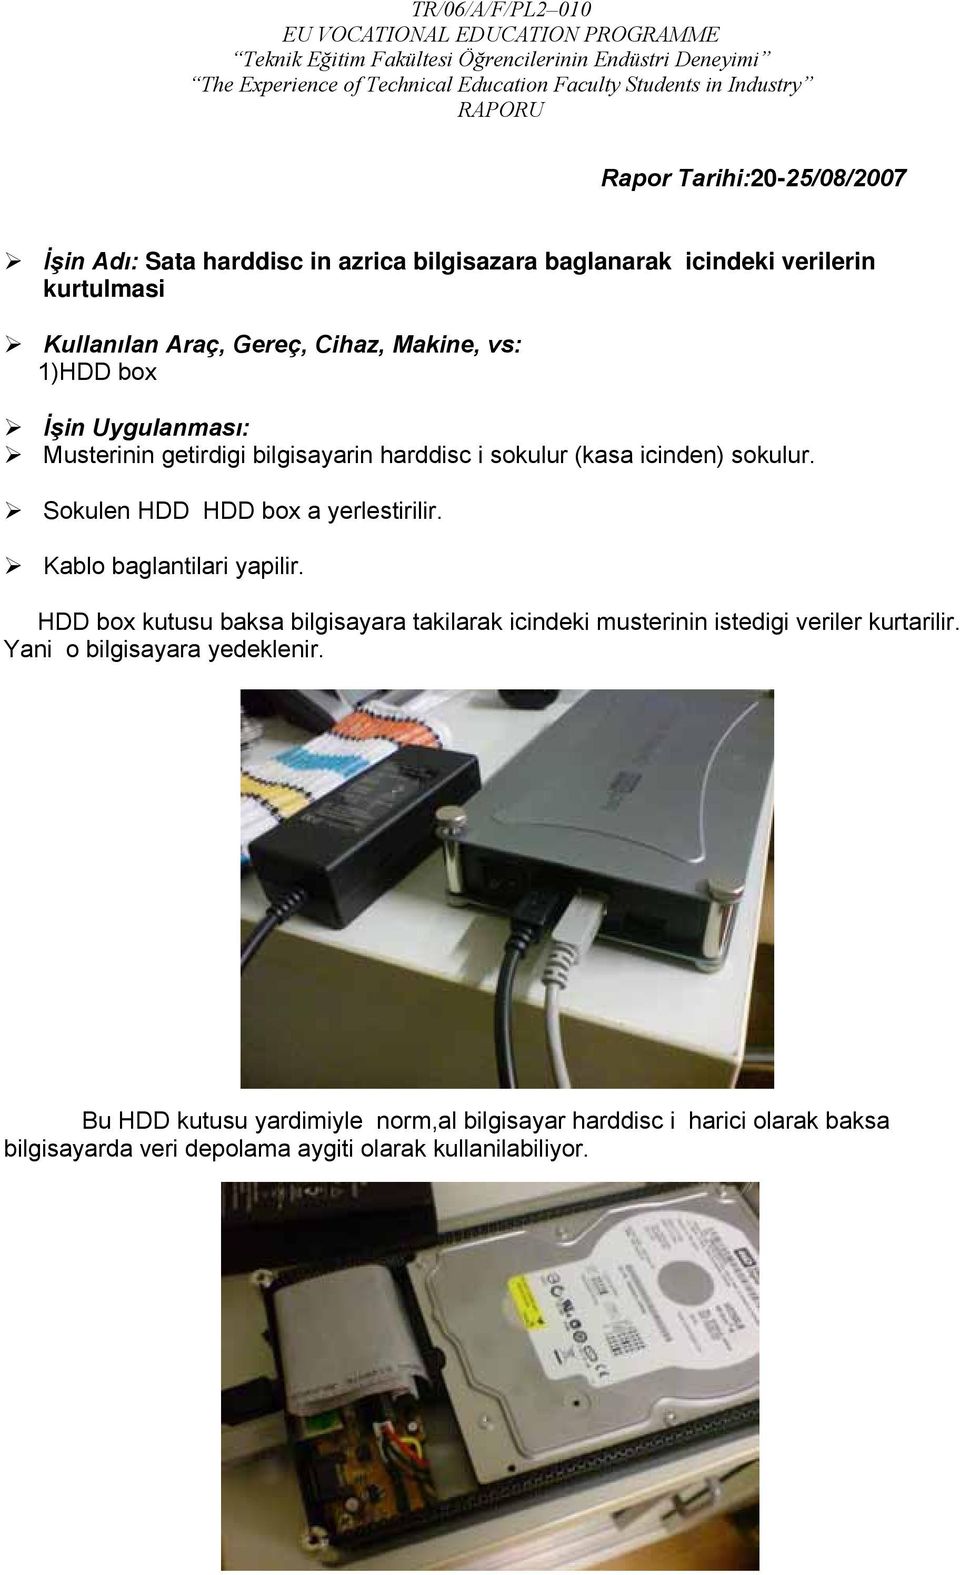 Sokulen HDD HDD box a yerlestirilir. Kablo baglantilari yapilir.